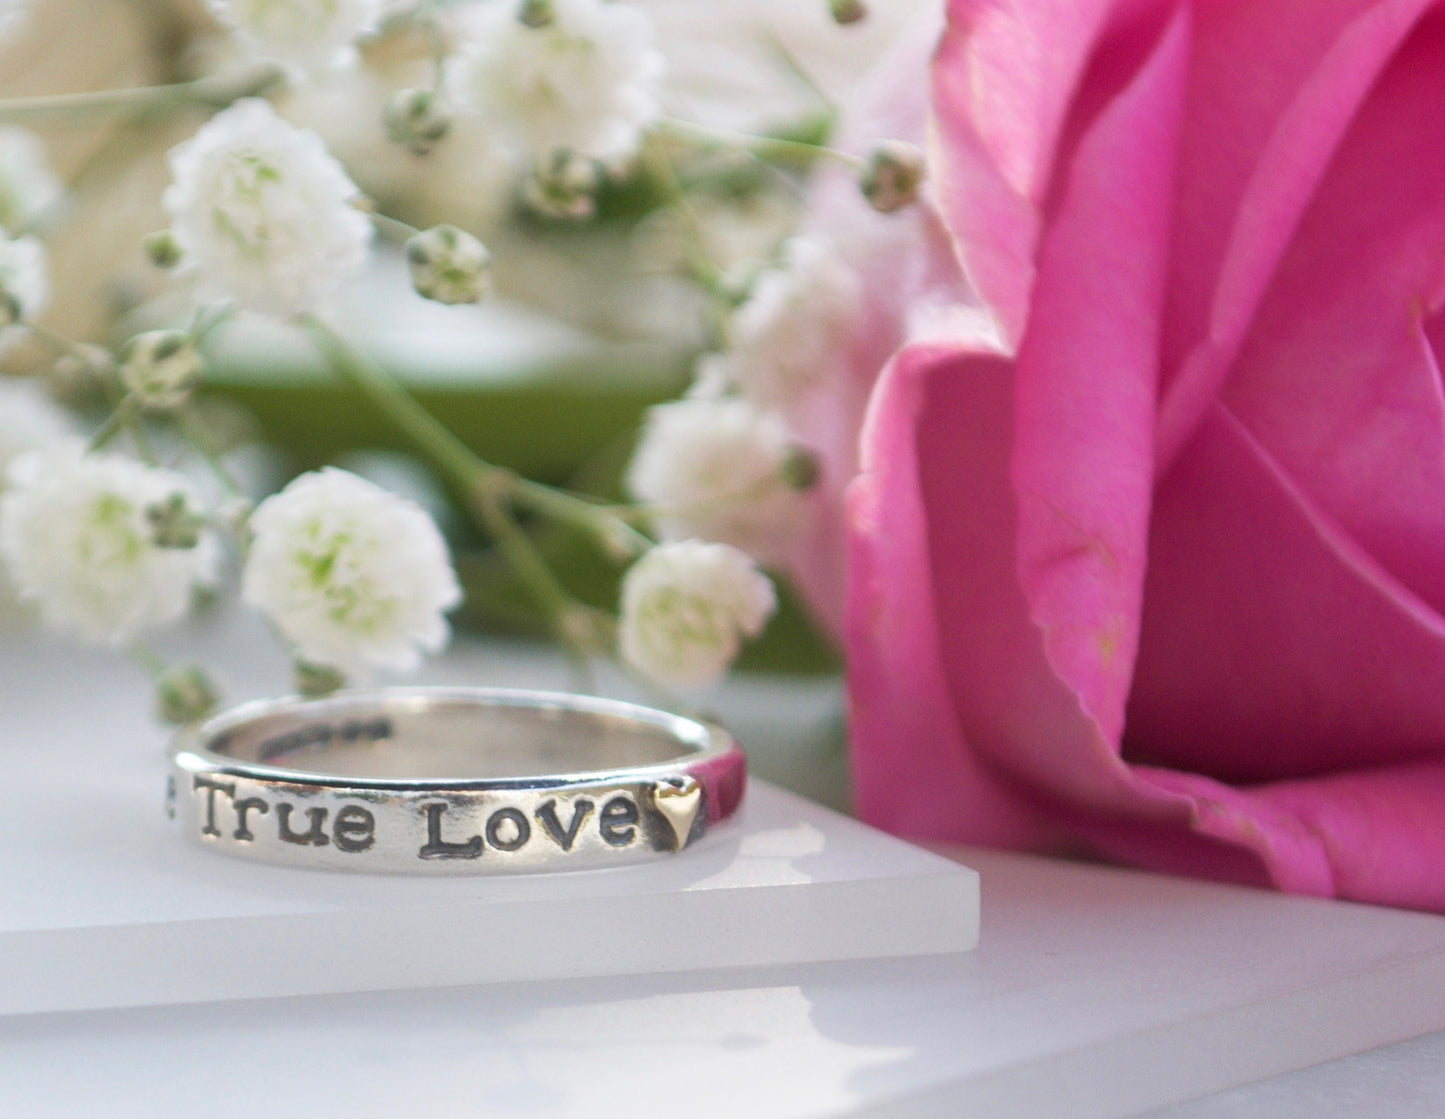 'One True Love' ring